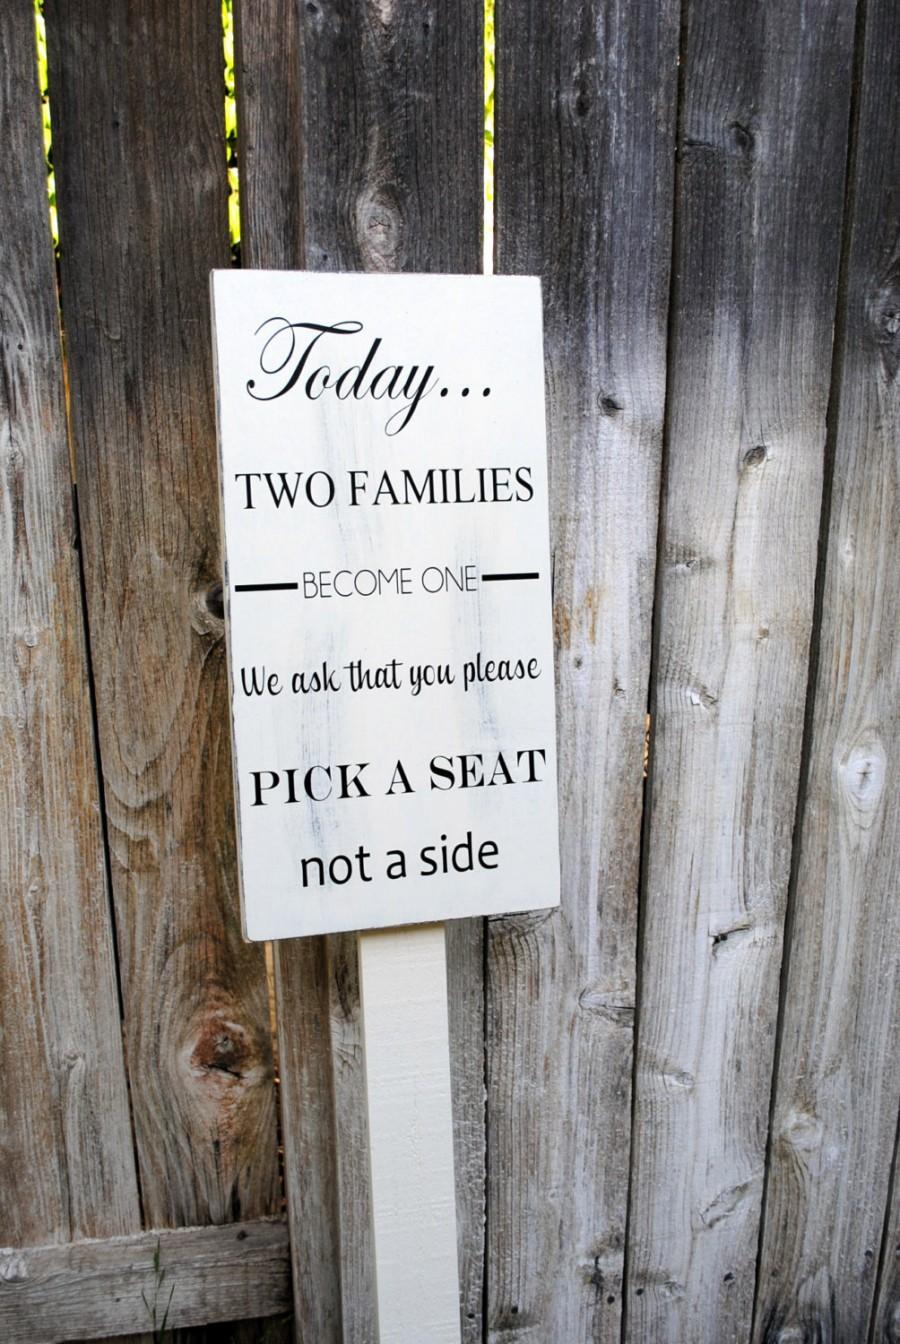 زفاف - 10"x18 shabby chic Today, two families become one, pick a seat not a side wood sign, seating sign ON STAKE